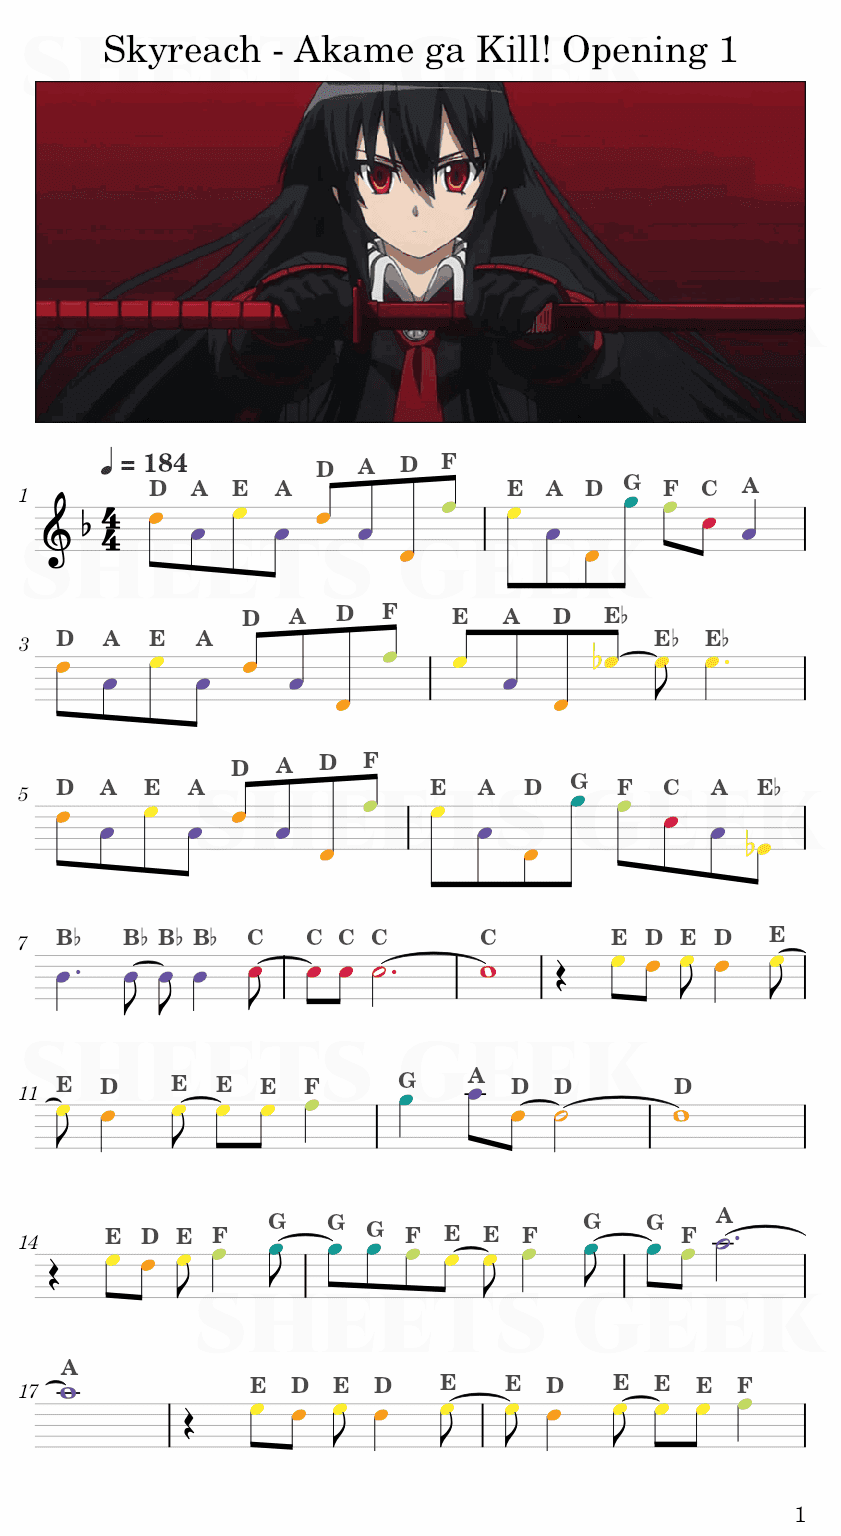 Skyreach - Akame ga Kill! Opening 1 Easy Sheet Music Free for piano, keyboard, flute, violin, sax, cello page 1